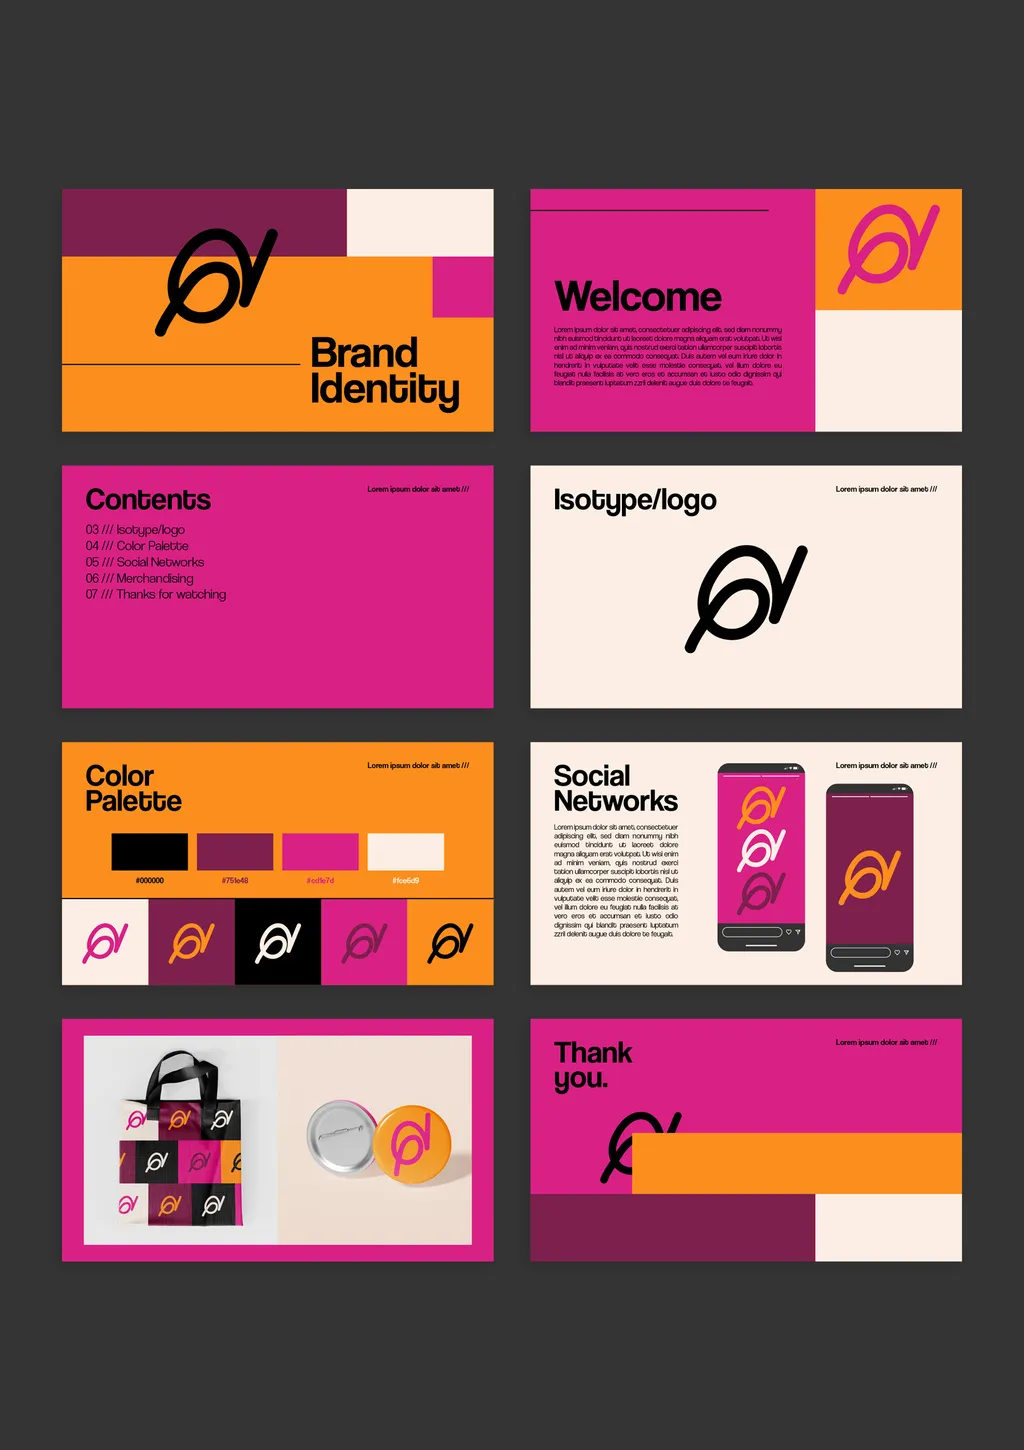 Adobestock - Brand Identity Manual Layout 758994429